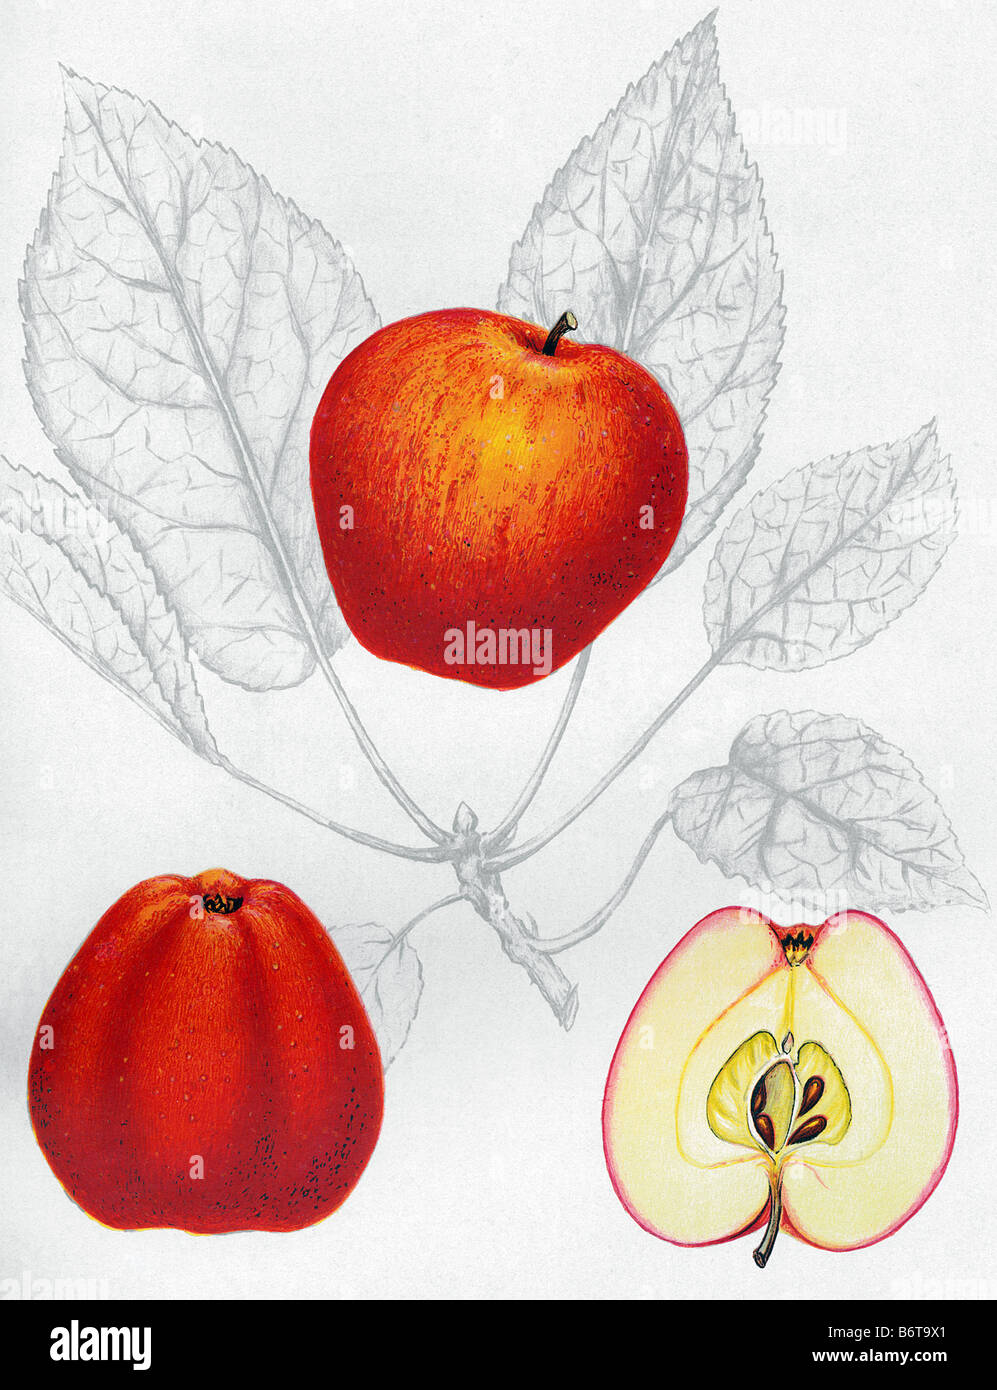 Illustrazione della apple 'ölands kungsäpple' Foto Stock